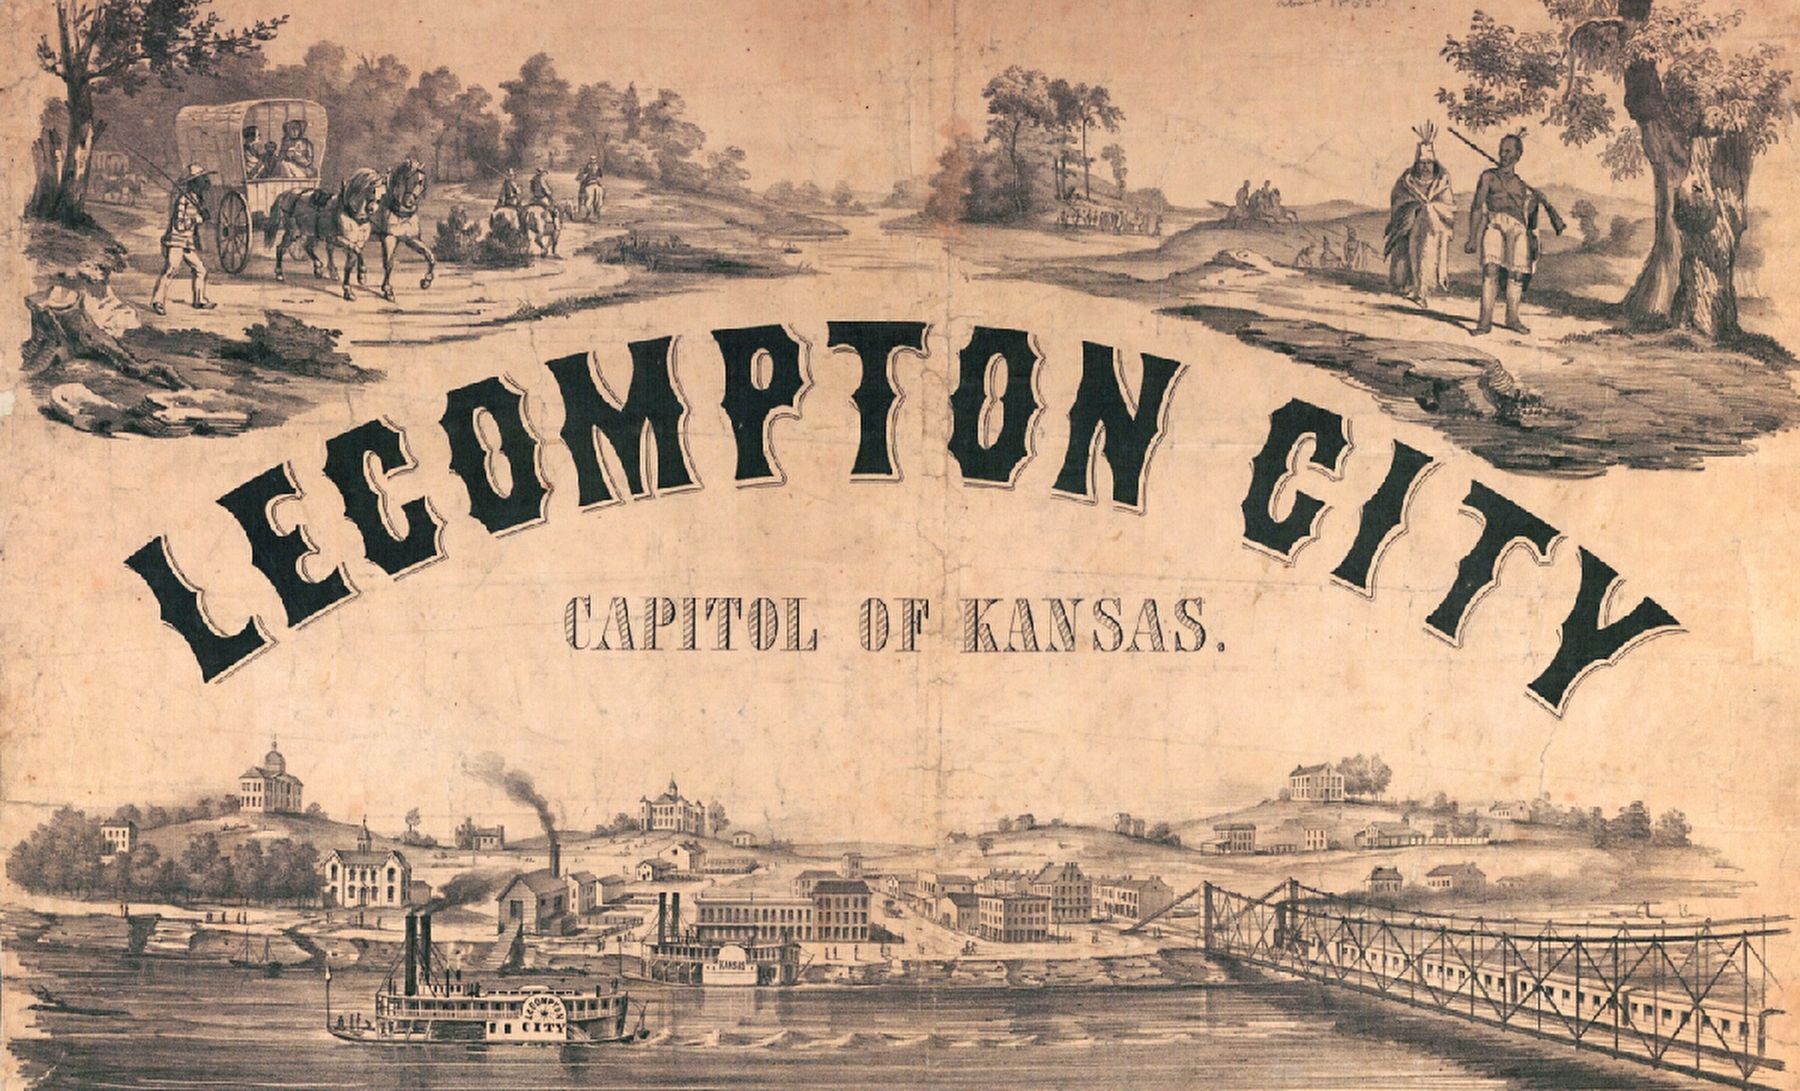 Lecompton, Capital of Kansas Territory image. Click for full size.